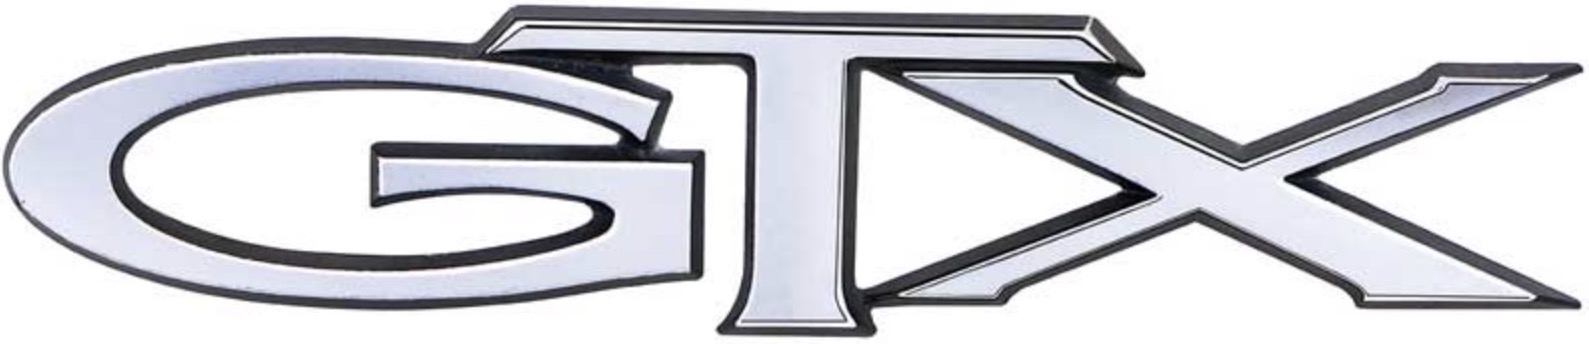 1970 GTX Grill Emblem